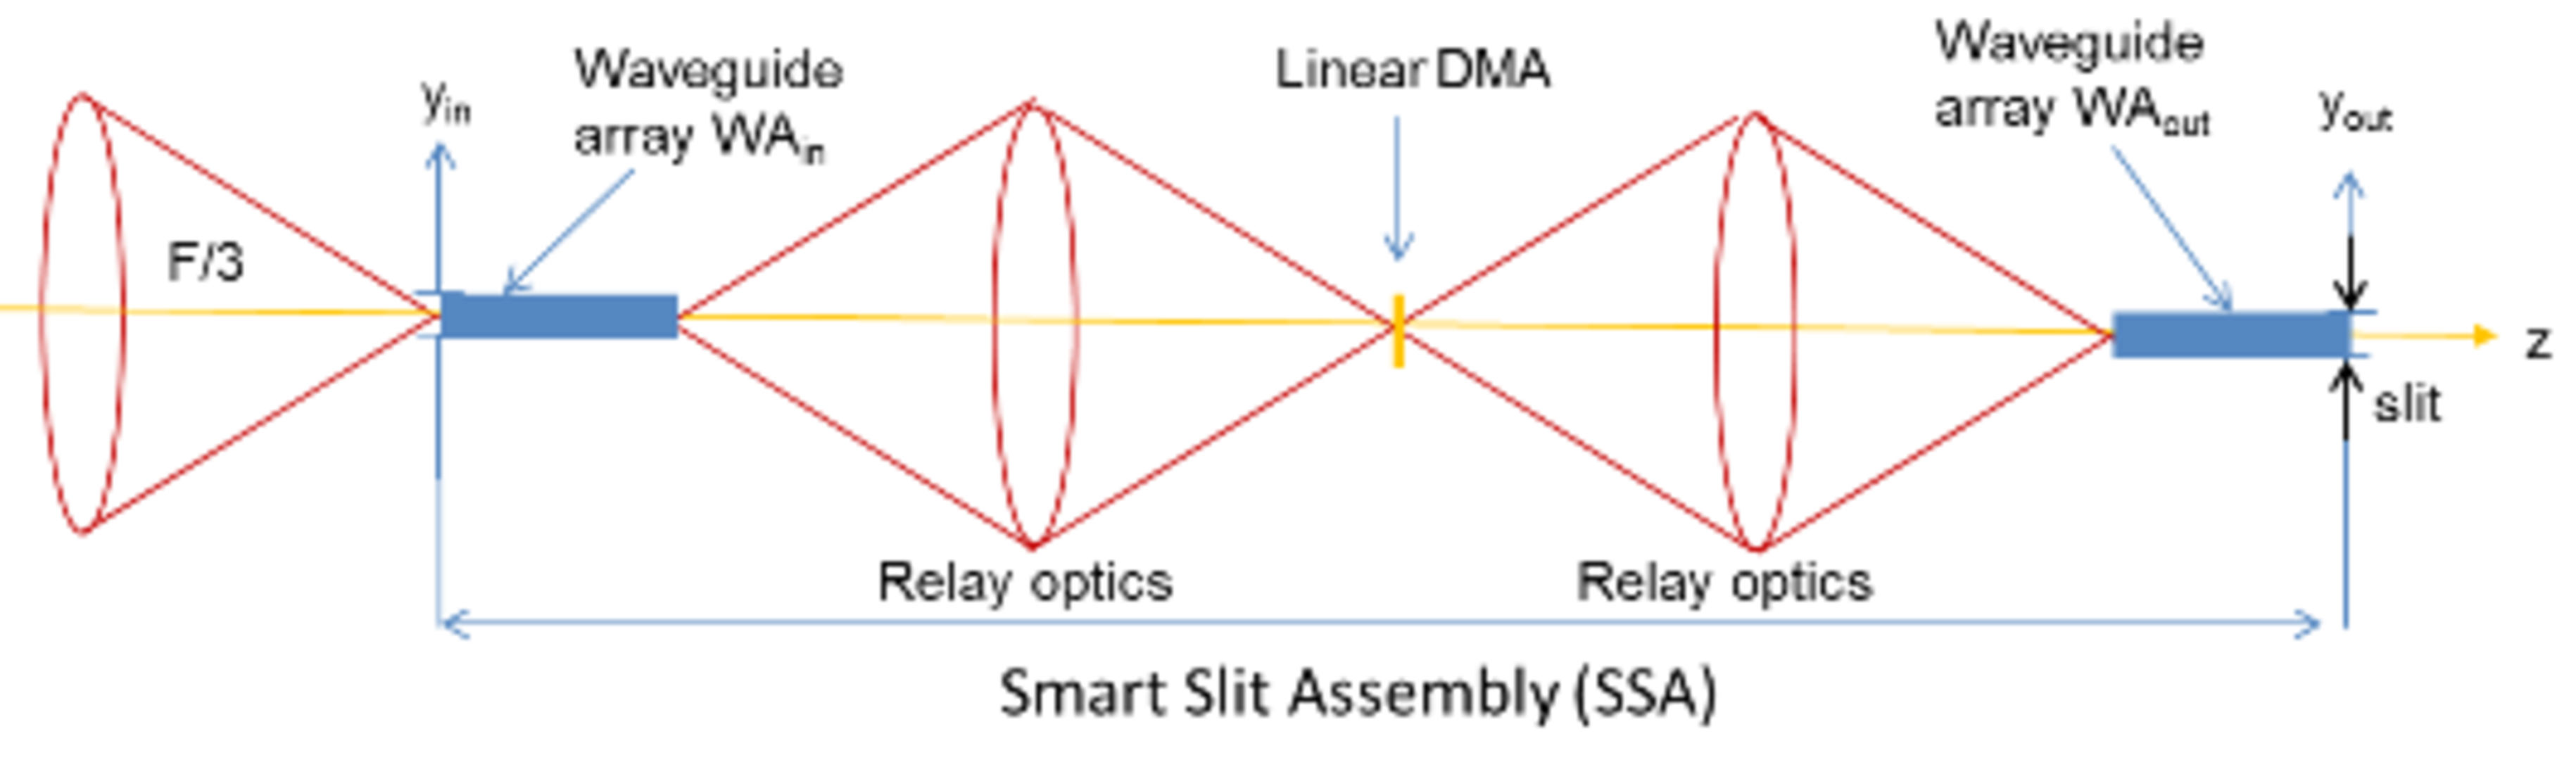 Figure 2: Example of Smart Slit Assembly (SSA) design solution